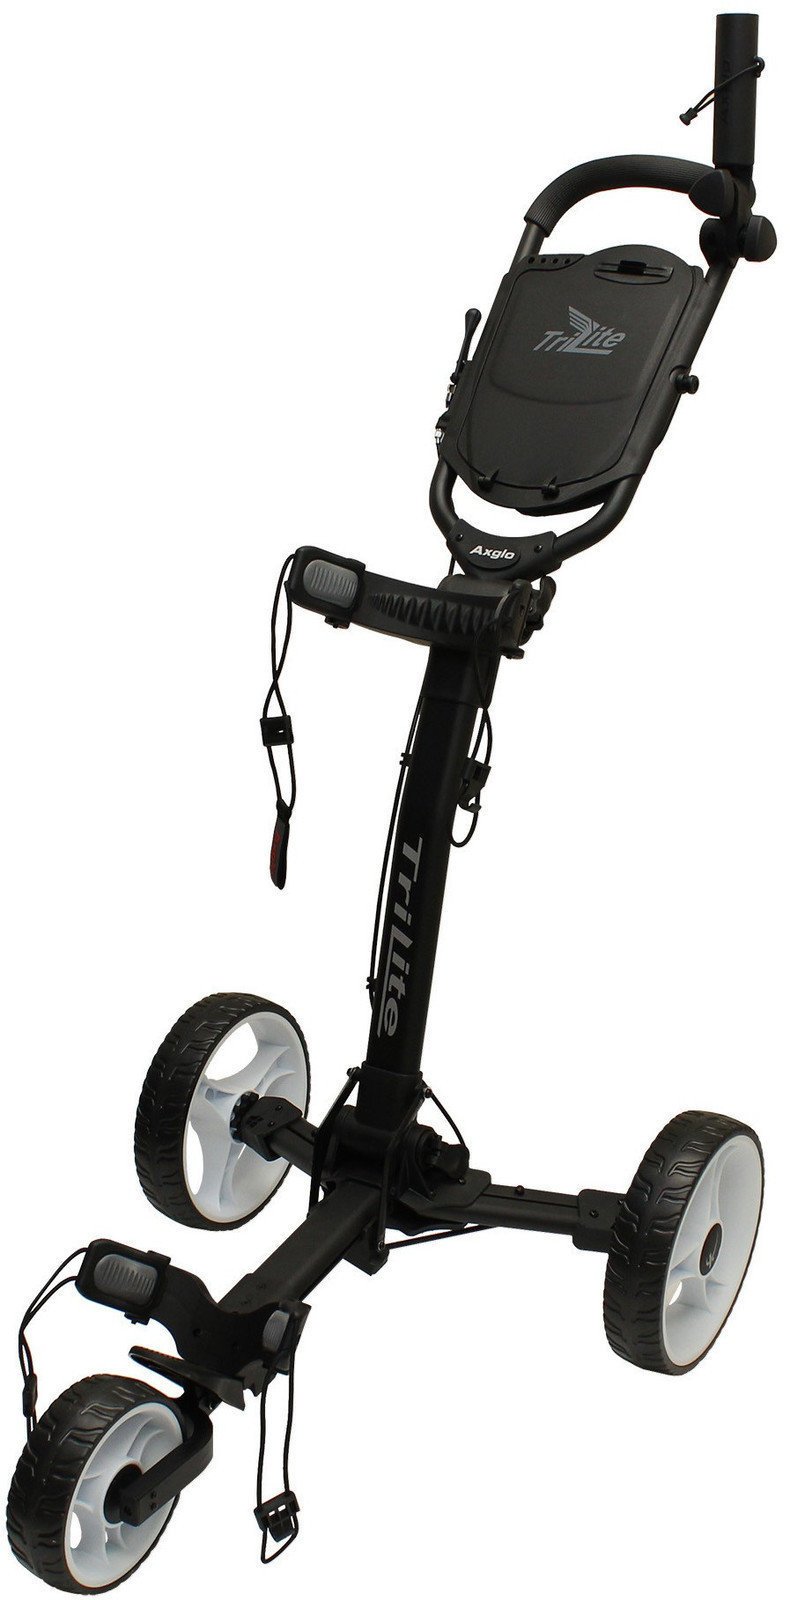 Chariot de golf manuel Axglo TriLite Black/White Chariot de golf manuel